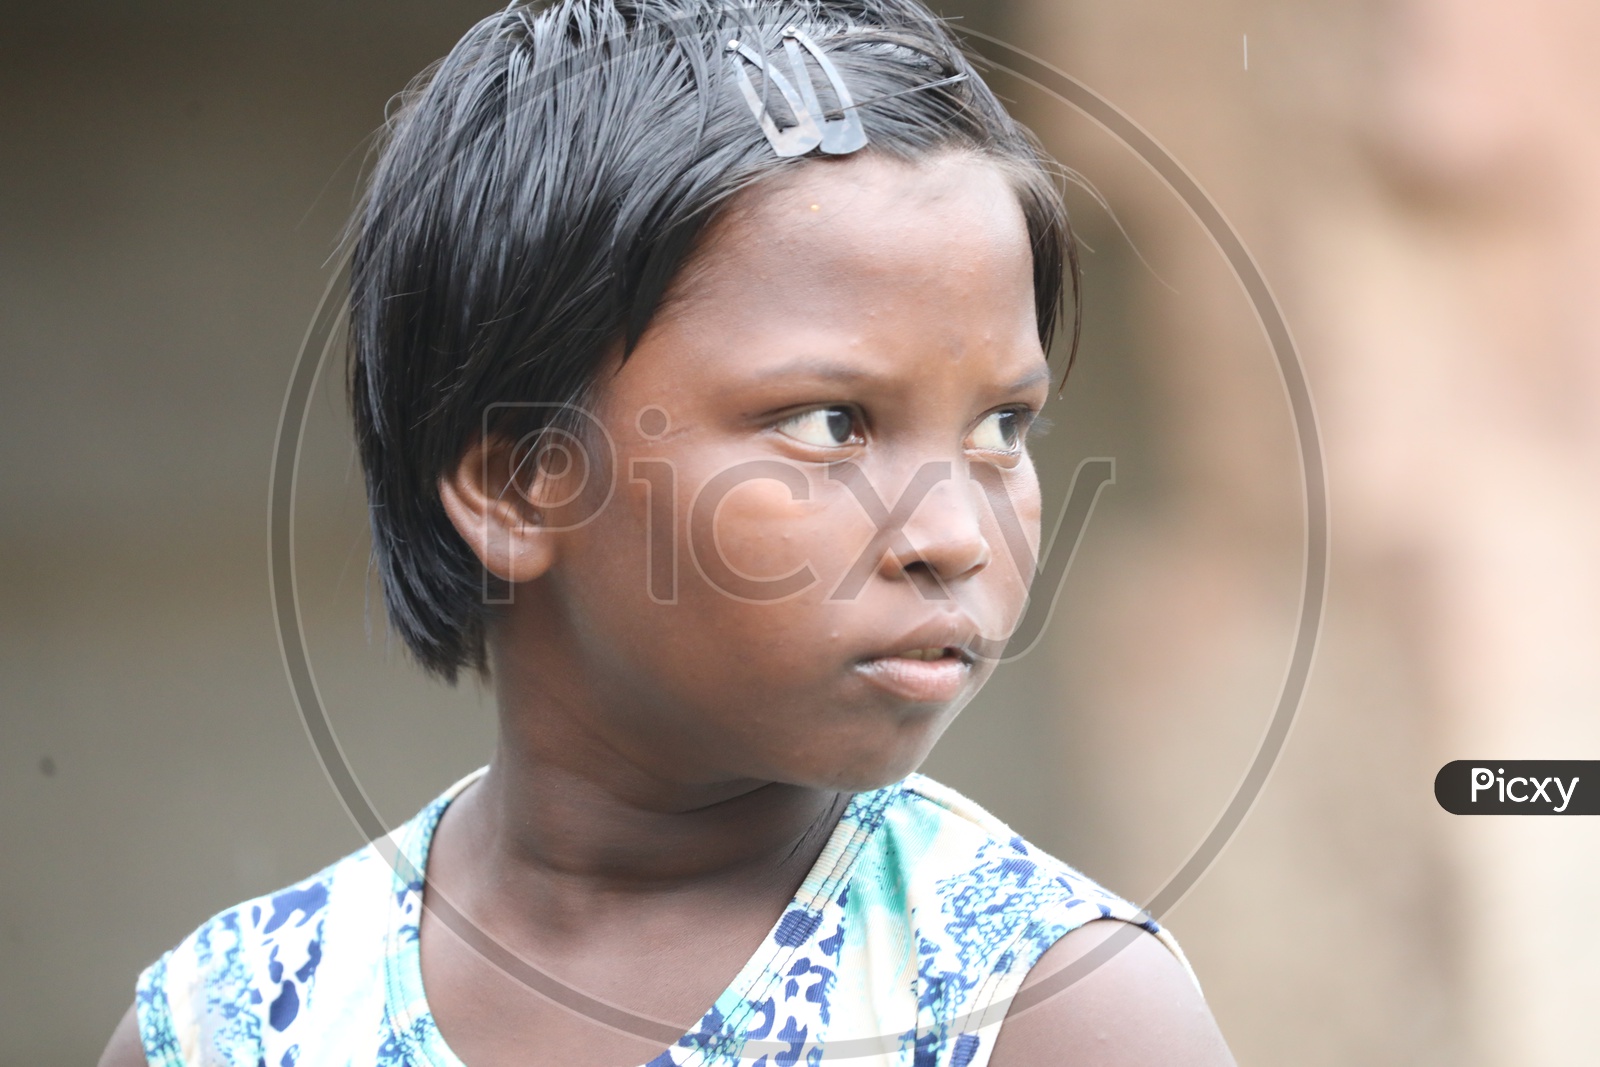 Indian Girl Child